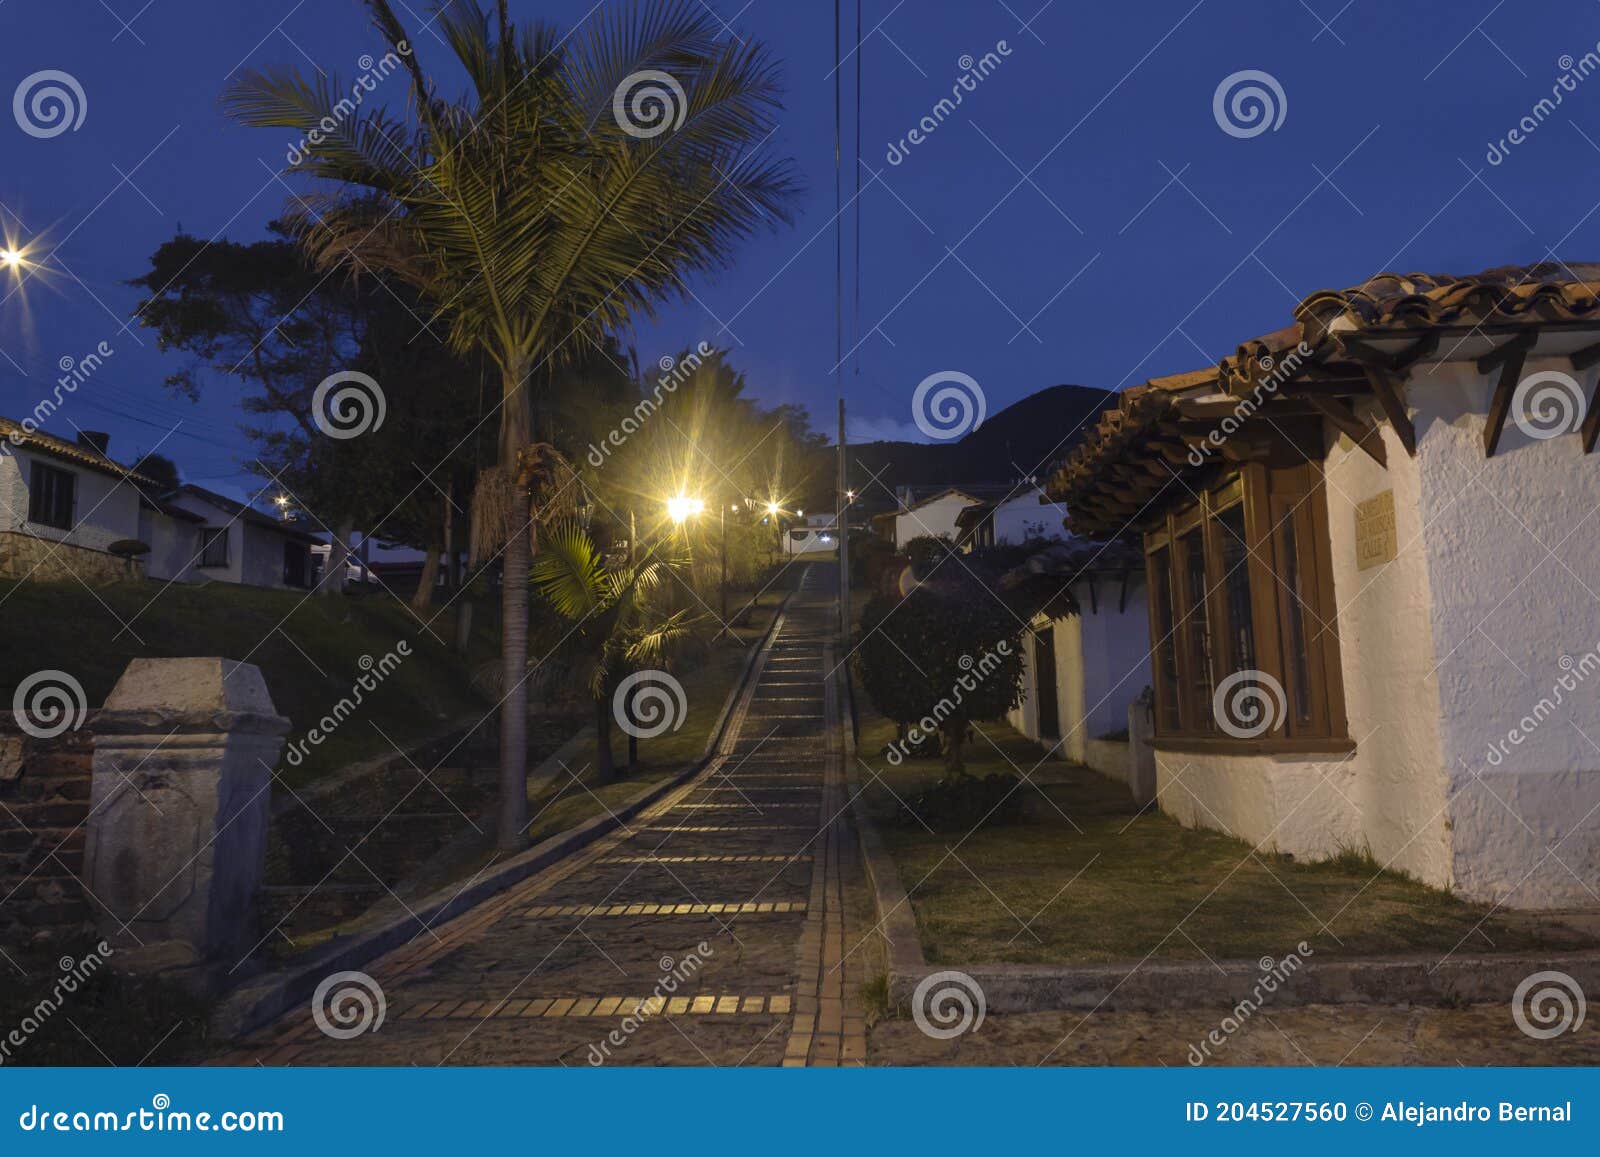 colombian guatavita colonial town night scene of an empty brick peatonal path